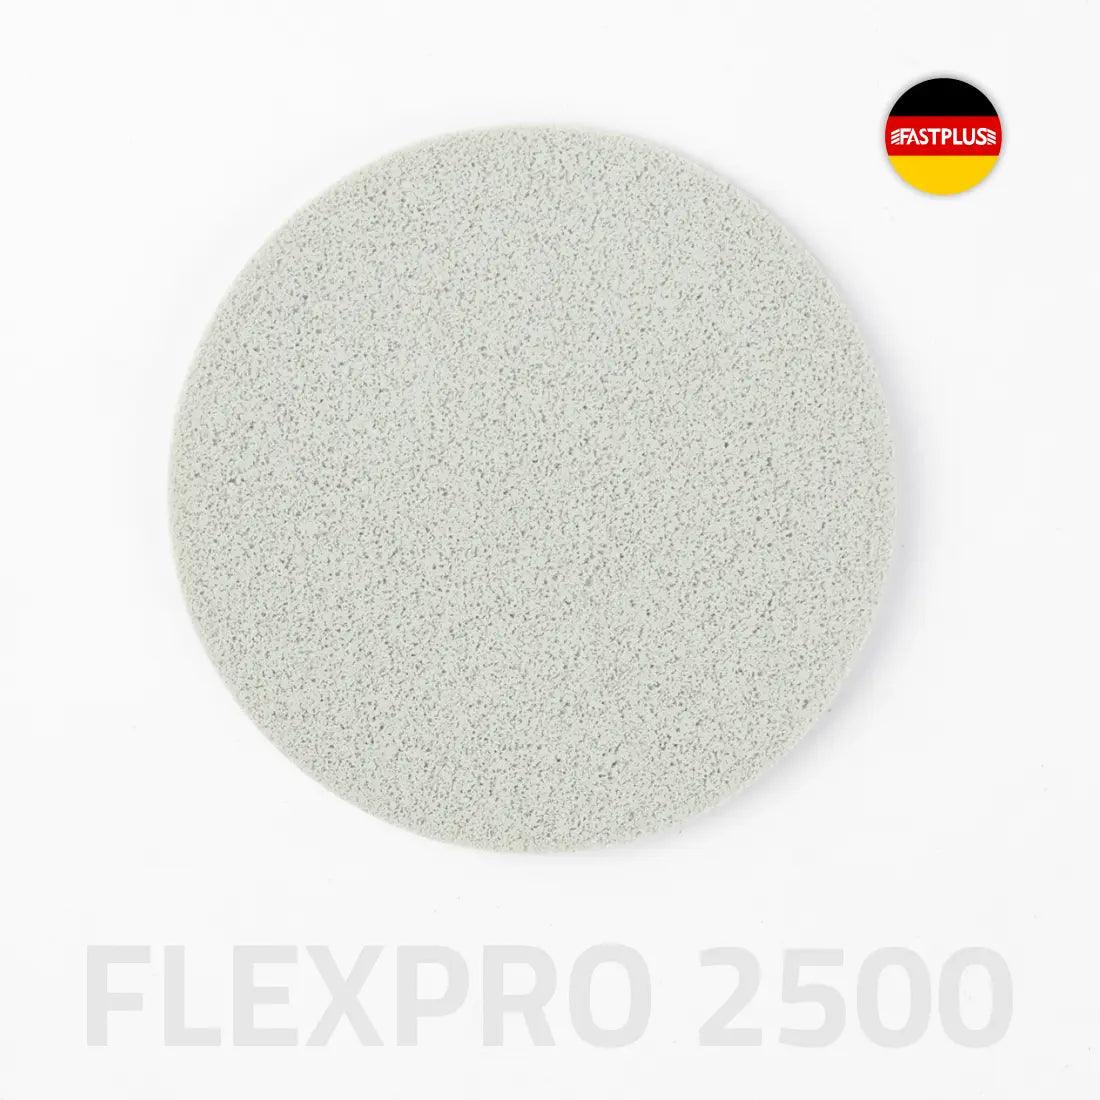 75mm FLEXPRO fine finishing foam discs trizact P2500 Schaumstoff feinschleifscheiben K2500 Disques de finition fine